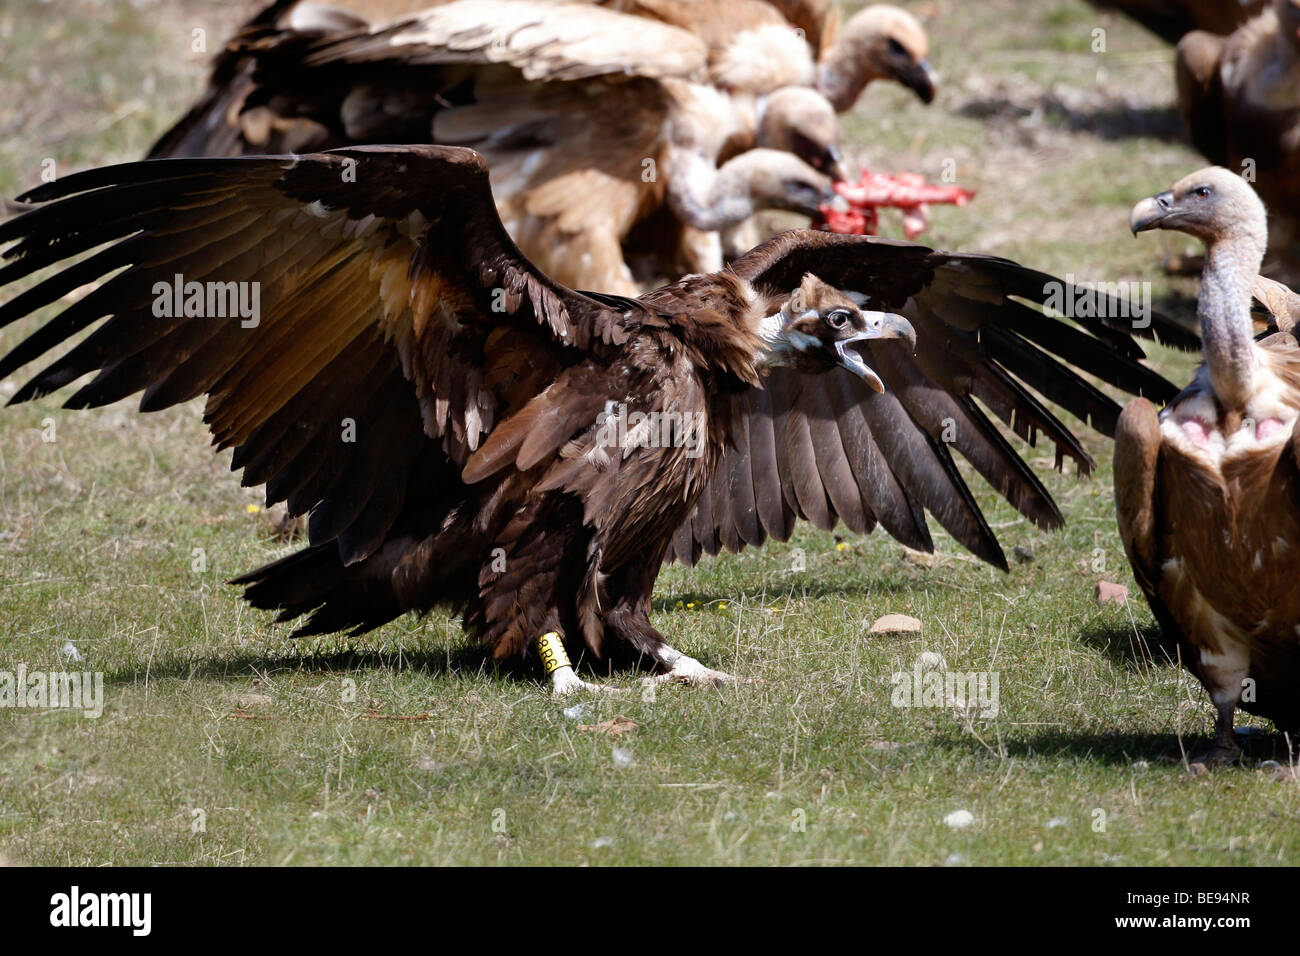 Met uitslaande vleugels van zich afbijtende Monniksgier. With spreaded wings sticking up for himself Eurasian Black Vulture. Stock Photo